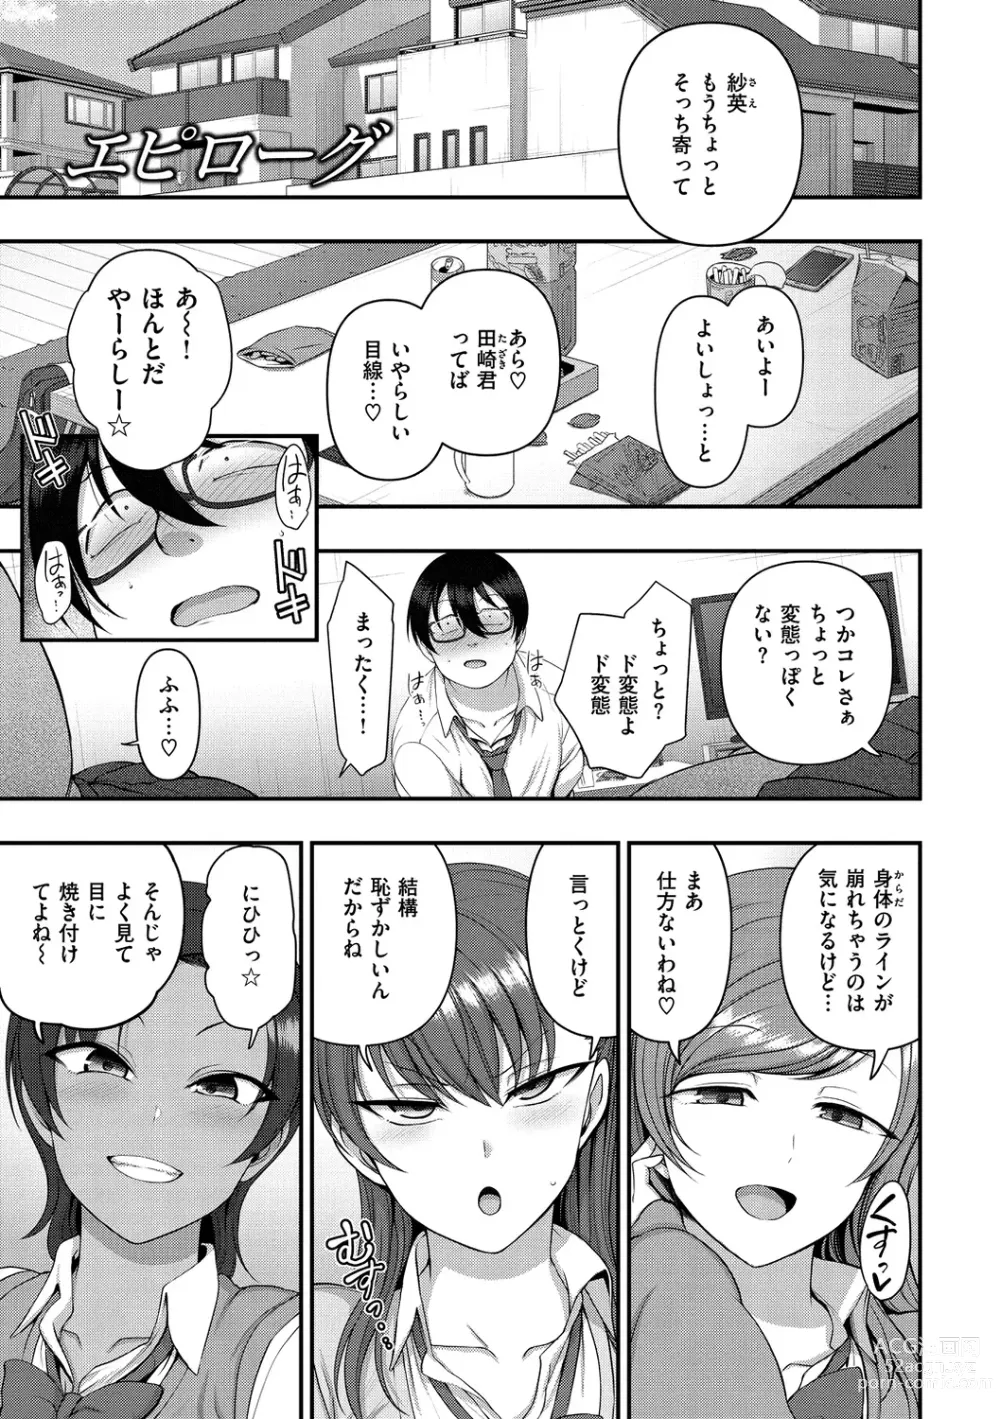 Page 229 of manga Ijirare